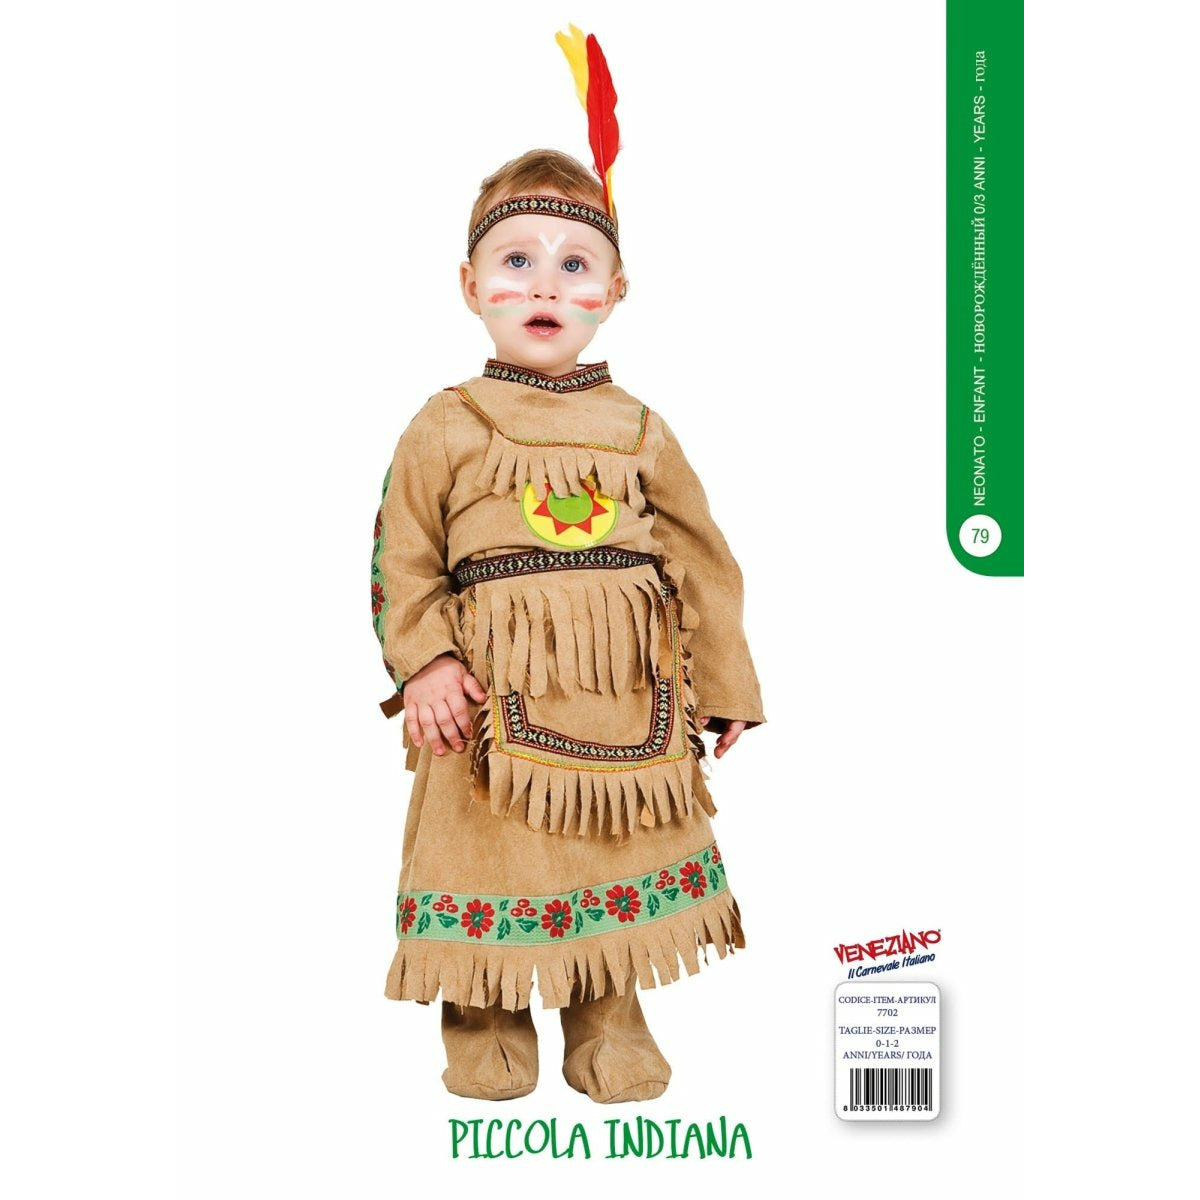 Piccola Indiana - Mstore016 - Carnevale neonata - Veneziano